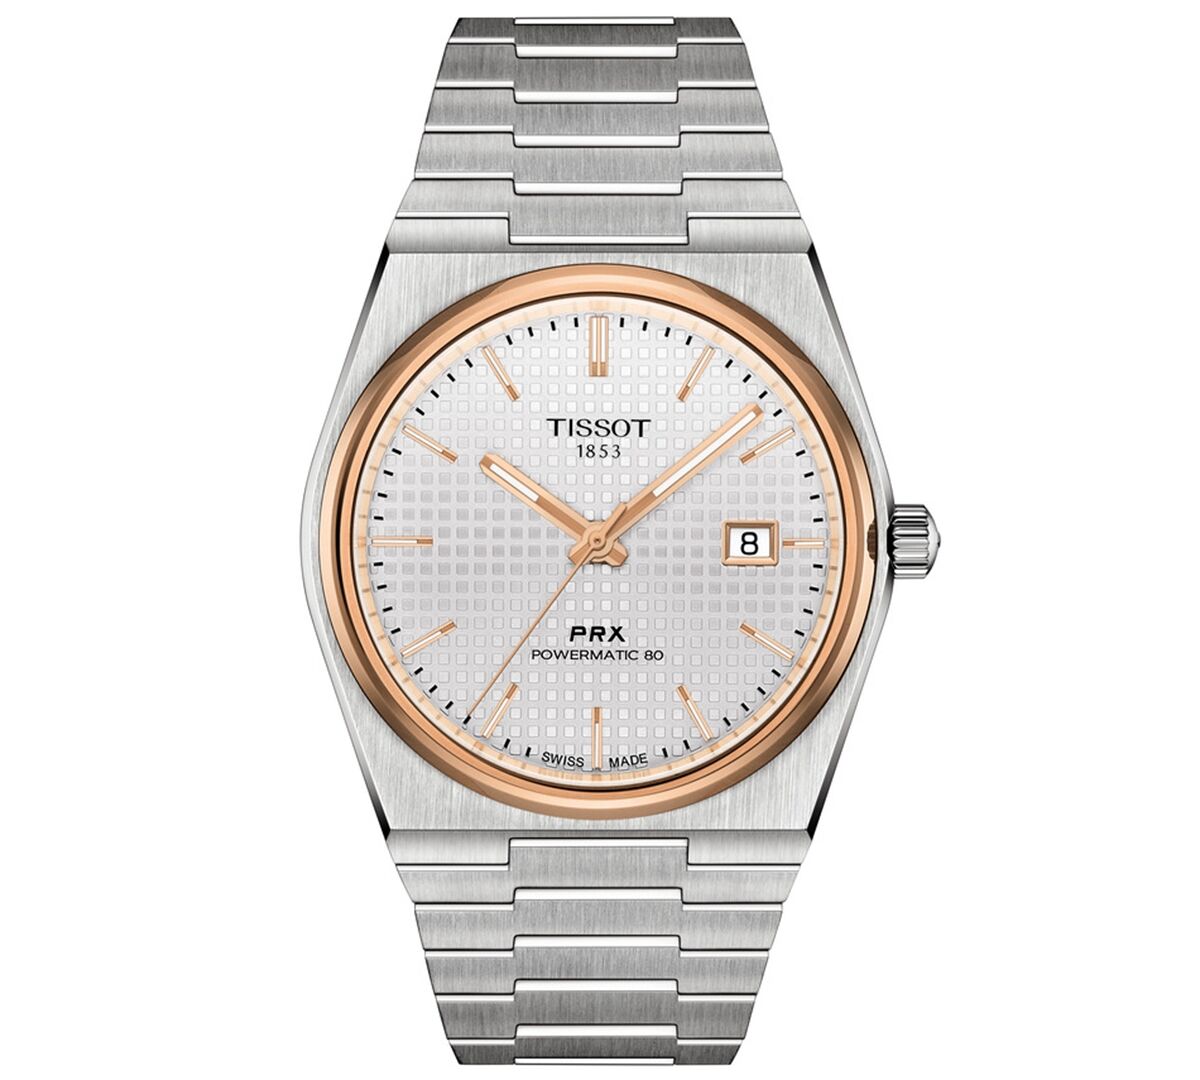 Tissot Men's Swiss Automatic Prx Powermatic 80 Stainless Steel Bracelet Watch 40mm - White